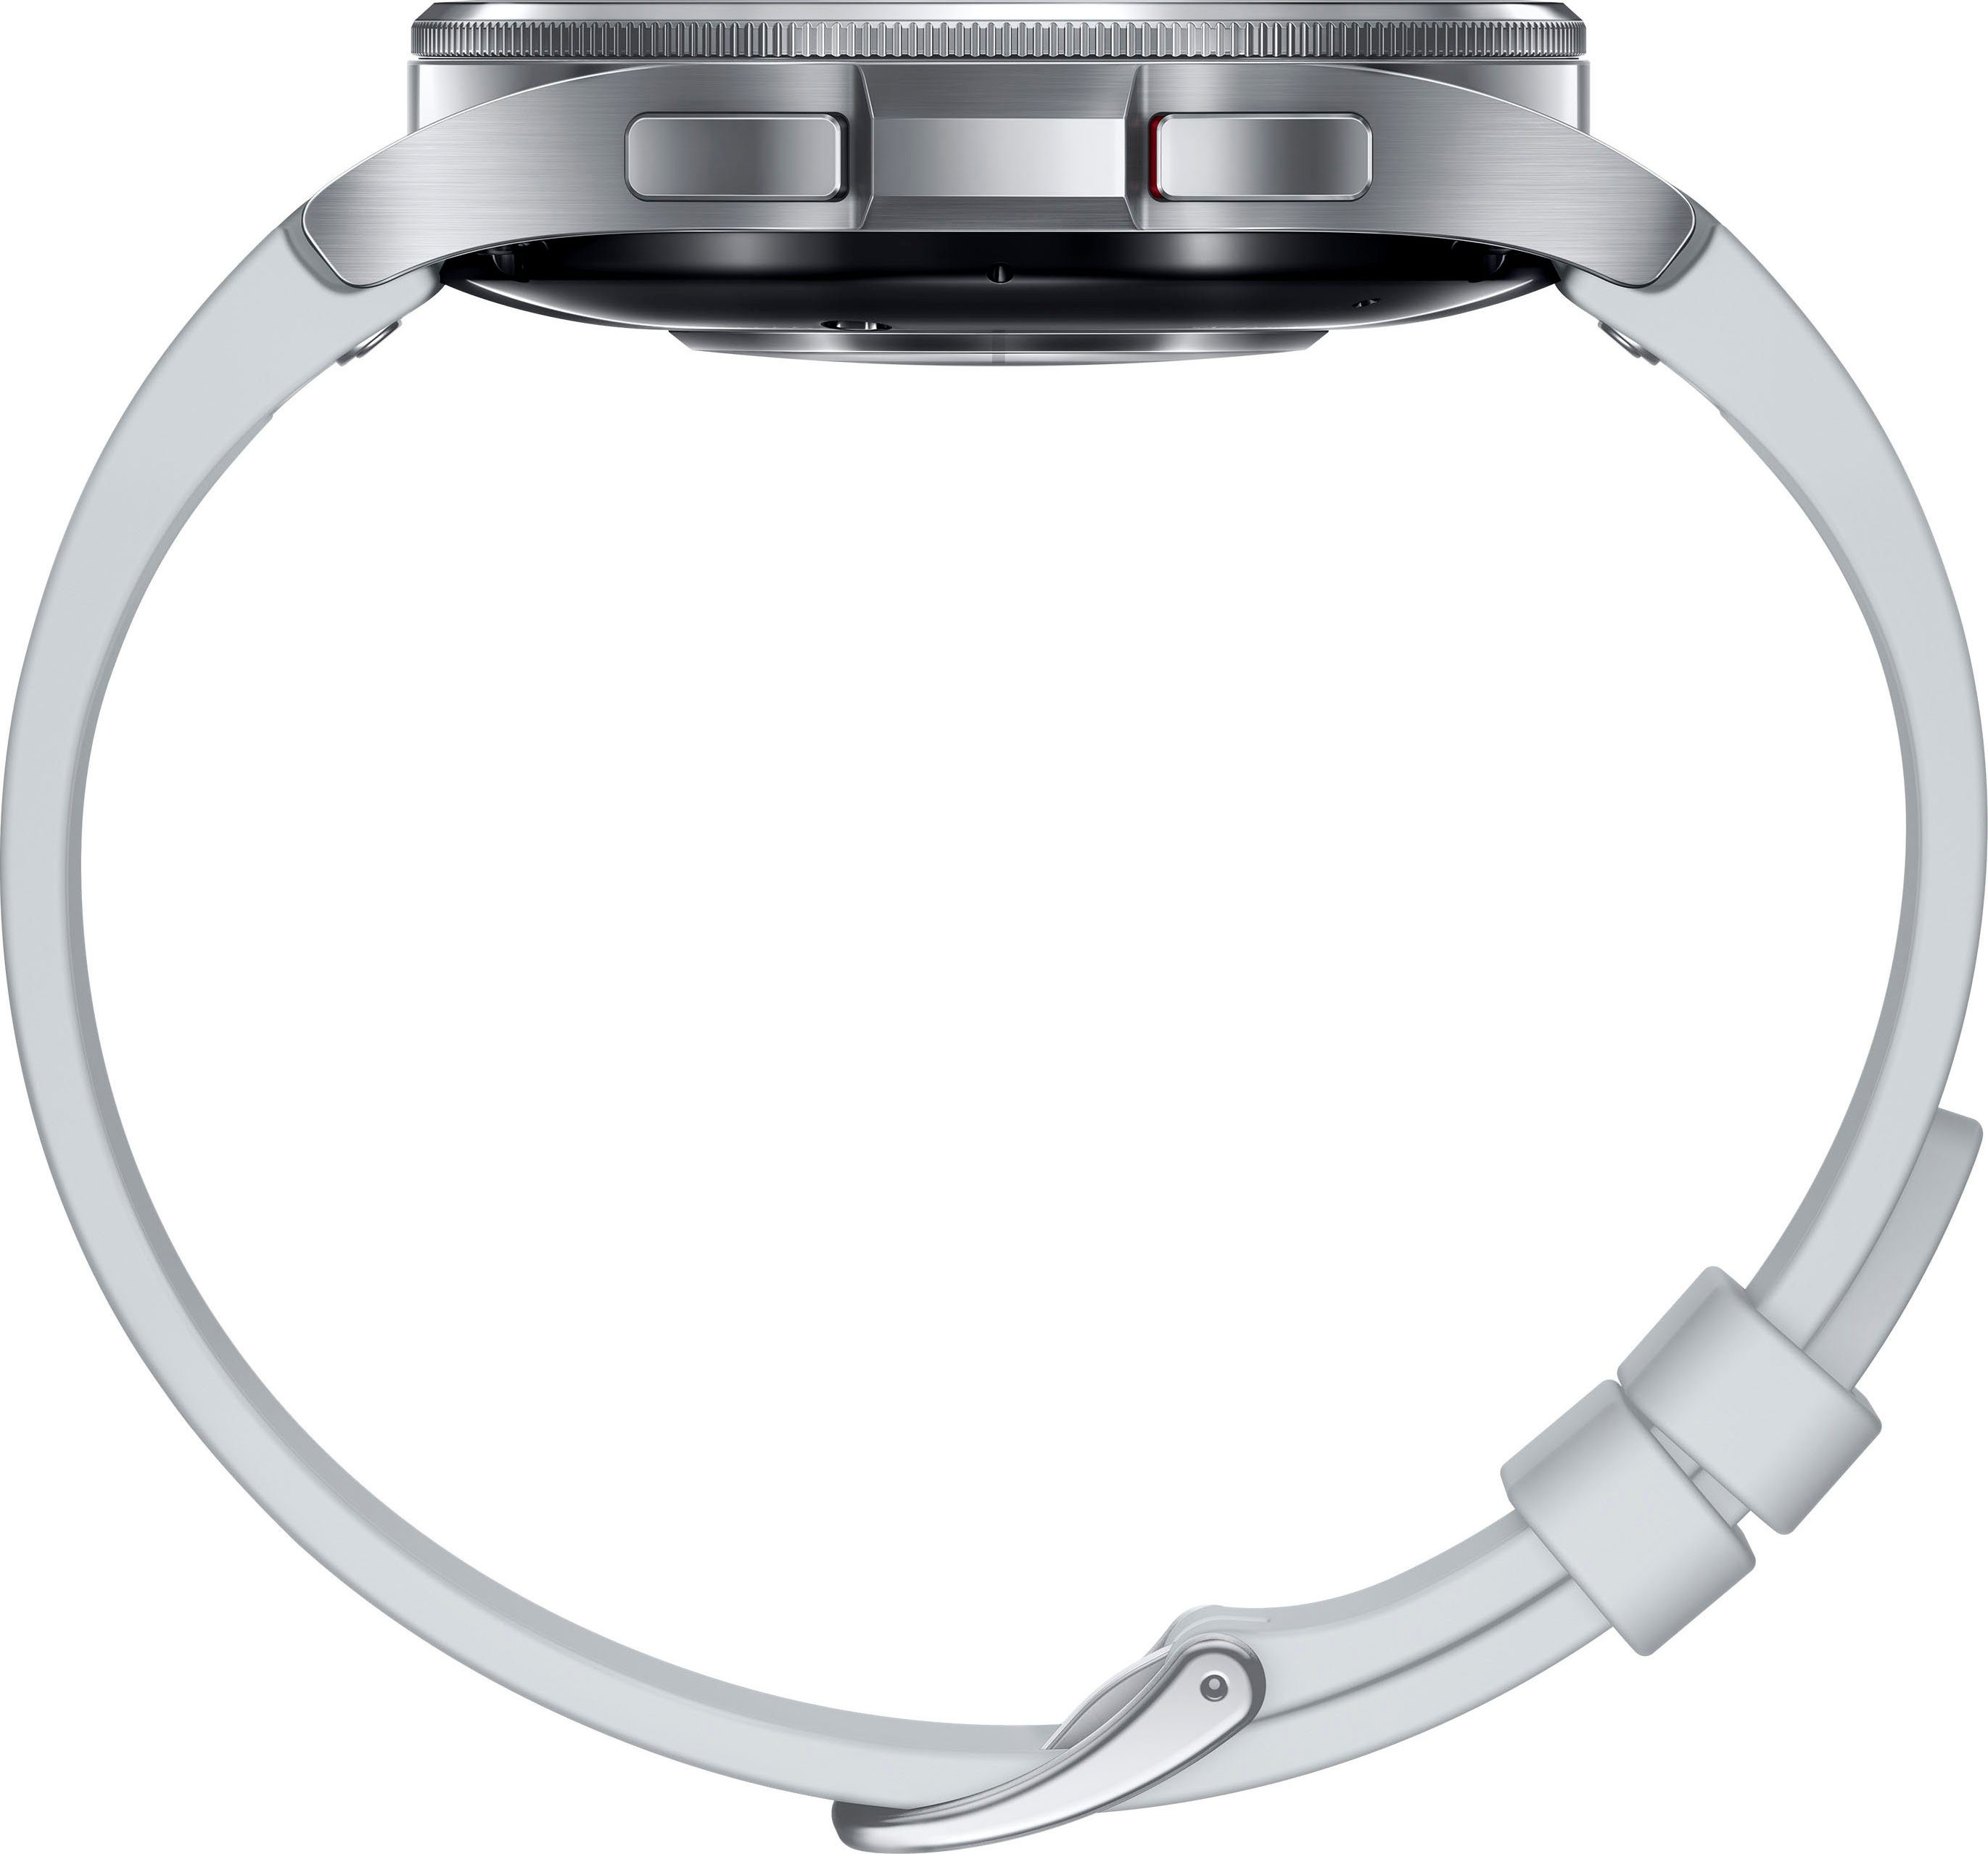 Samsung Galaxy Watch 6 Smartwatch 47mm silberfarben silberfarben by cm/1'5 | Samsung) Classic Wear (3'73 Zoll, OS